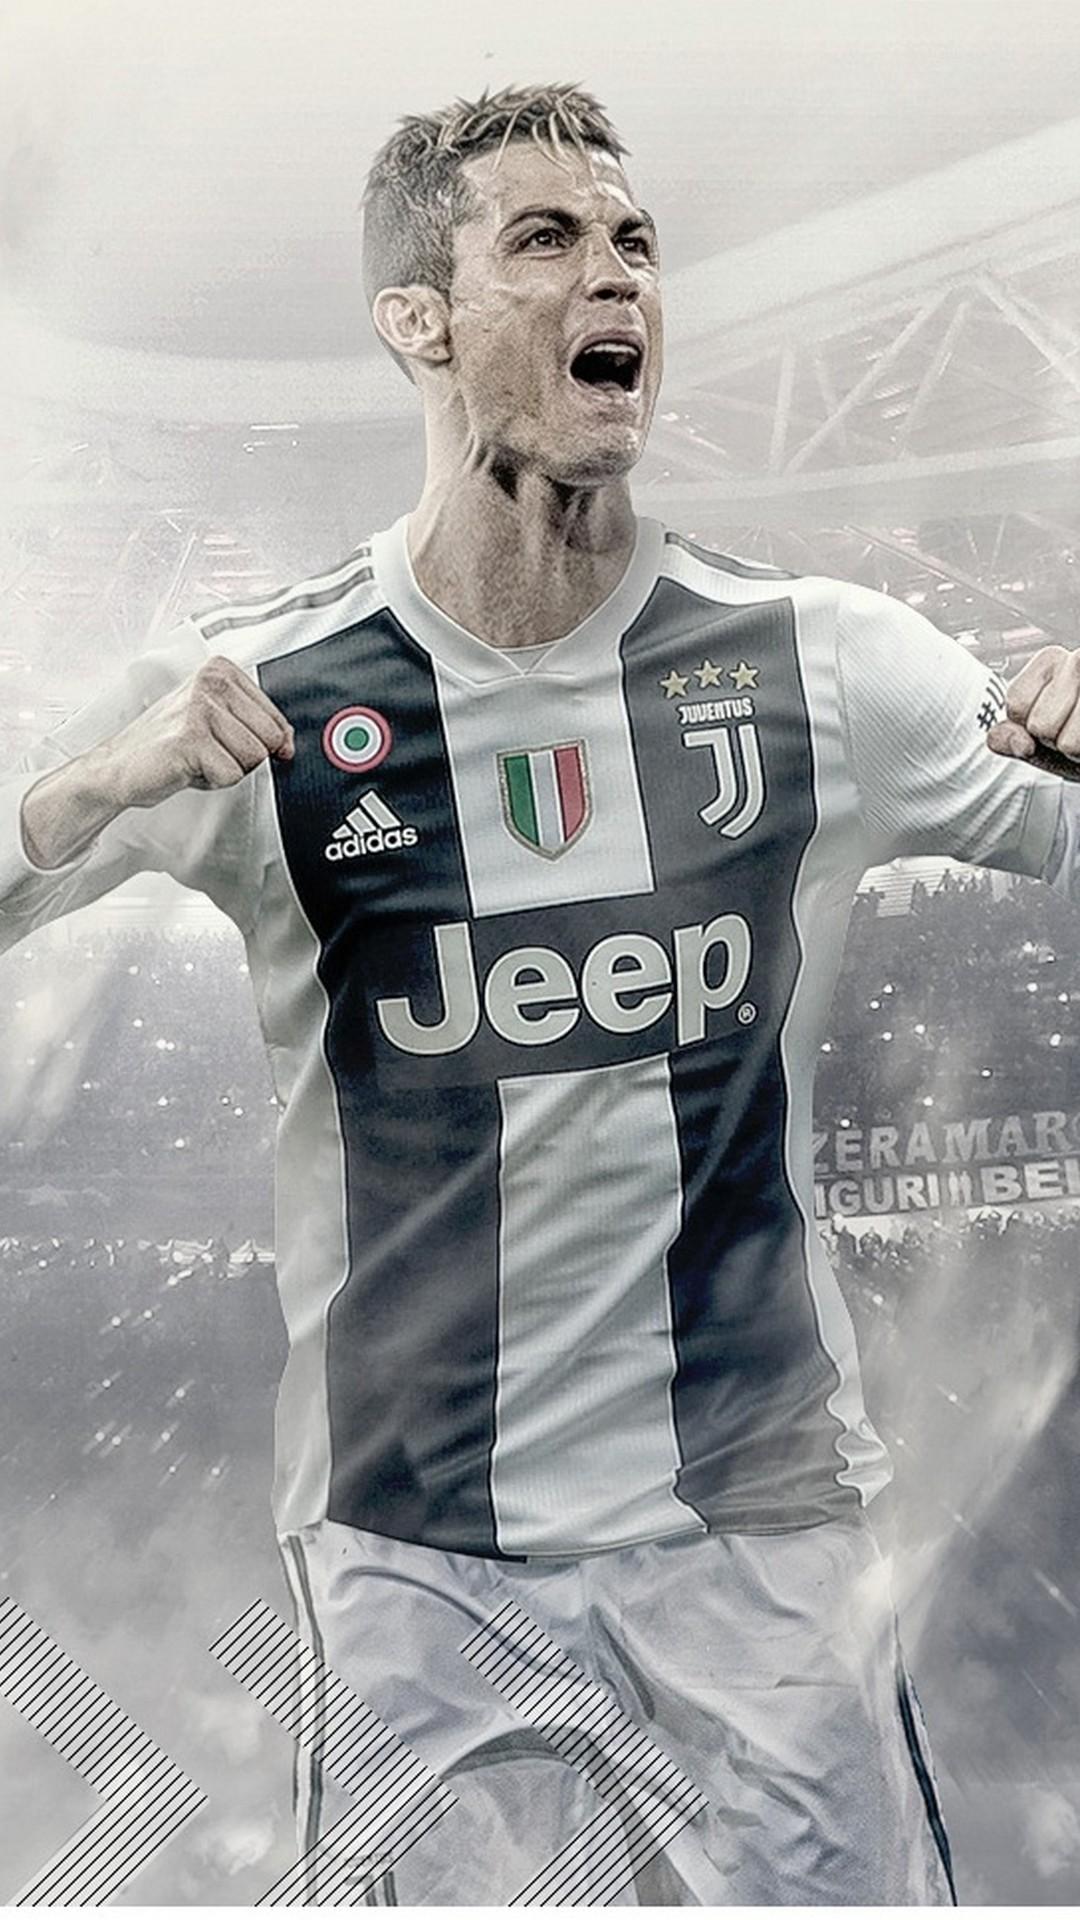 Wallpaper Android Cristiano Ronaldo Juventus Android